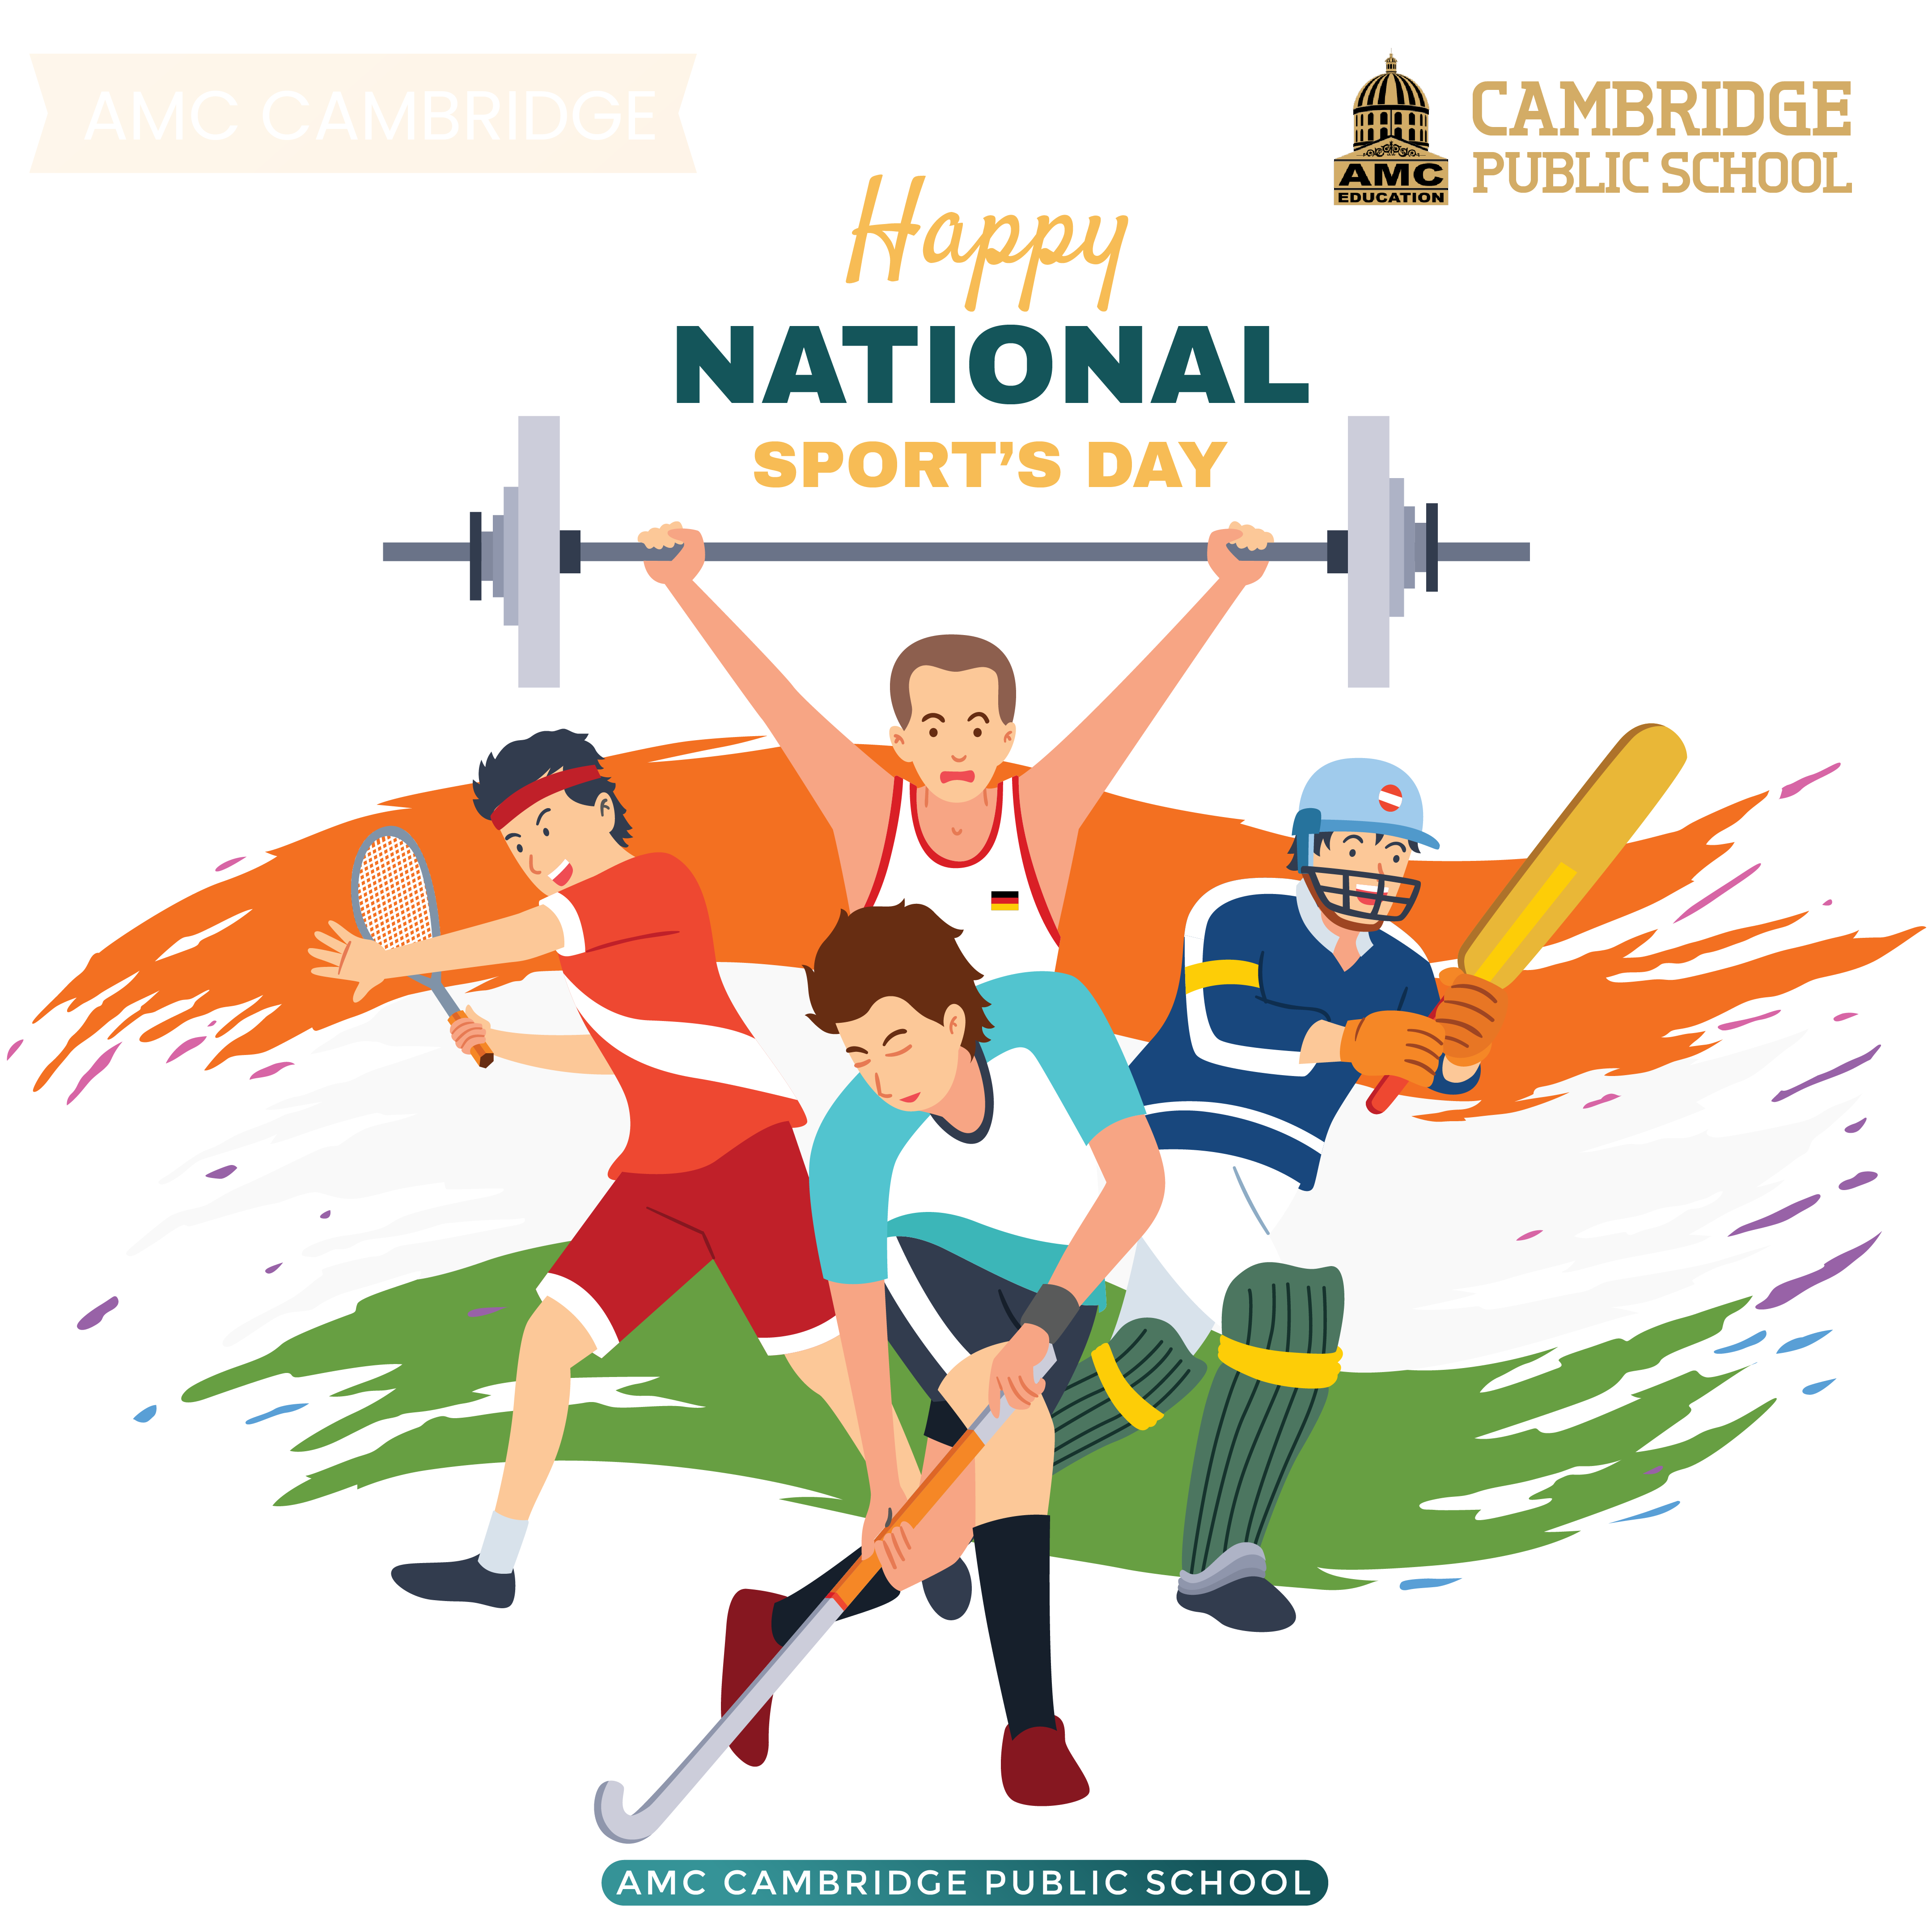 National Sports Day Celebration at AMC Cambridge Public School